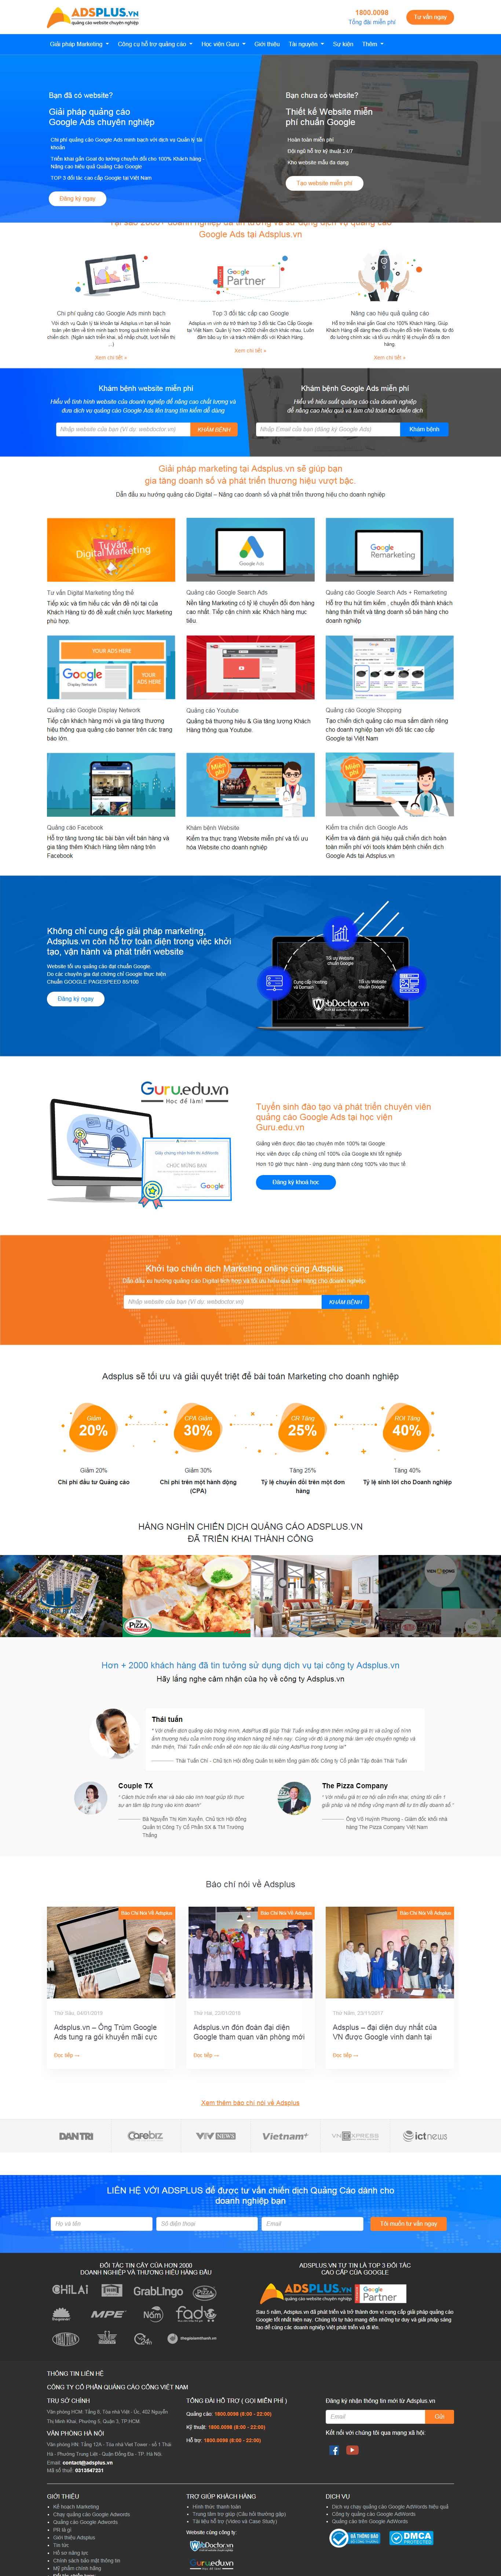 Thiết kế Website quảng cáo google - adsplus.vn